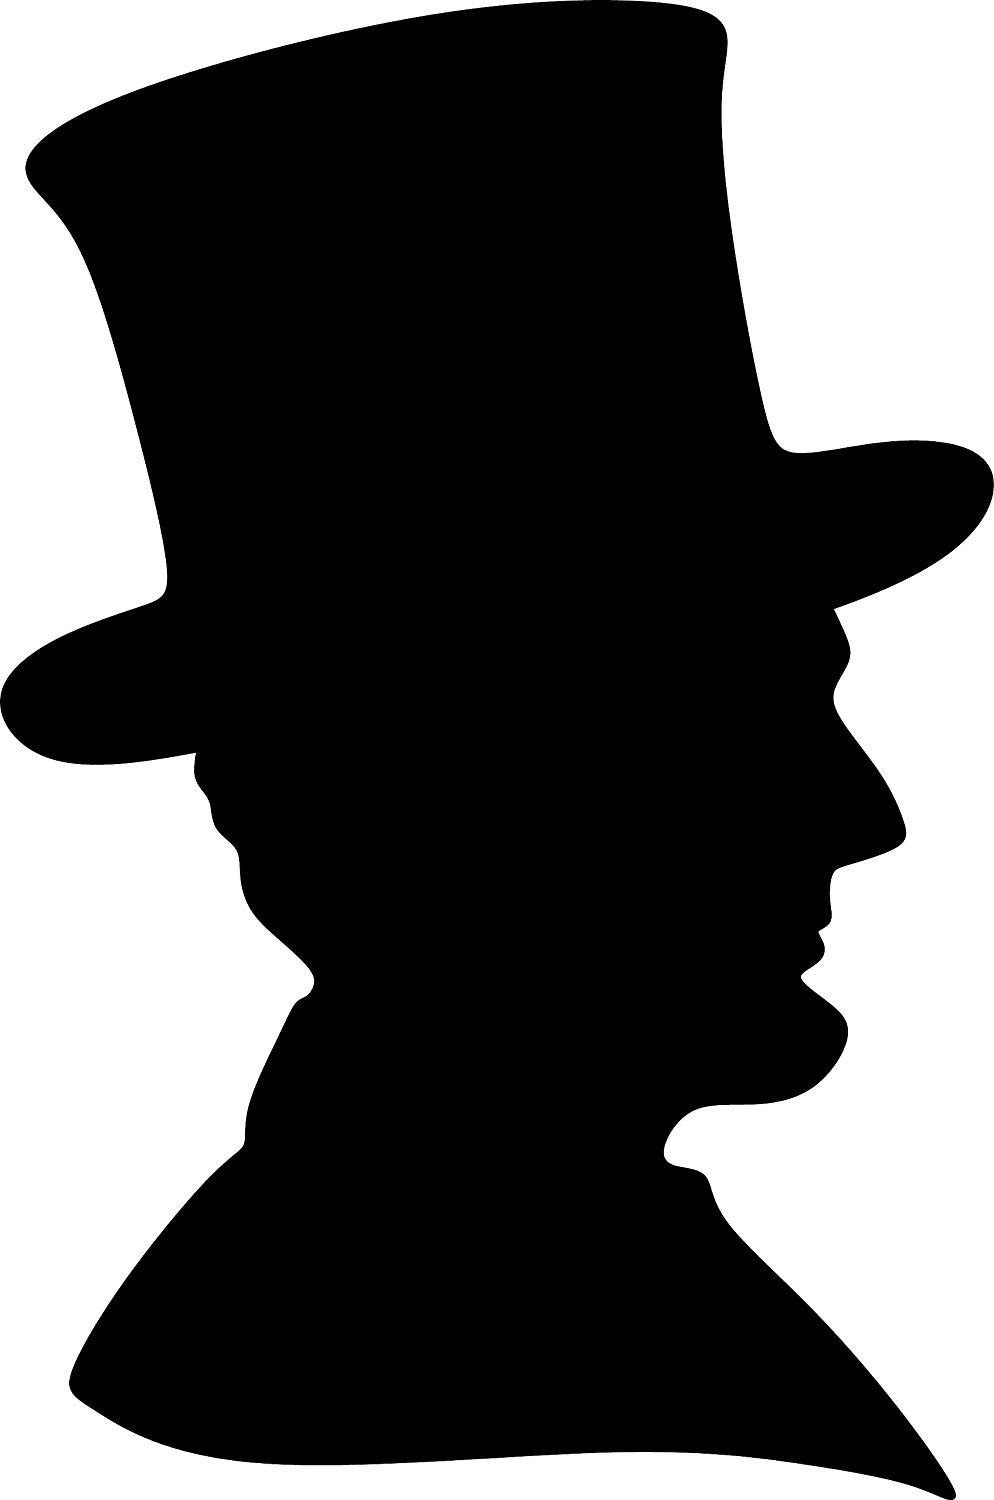 Abraham Lincoln Silhouette Printable